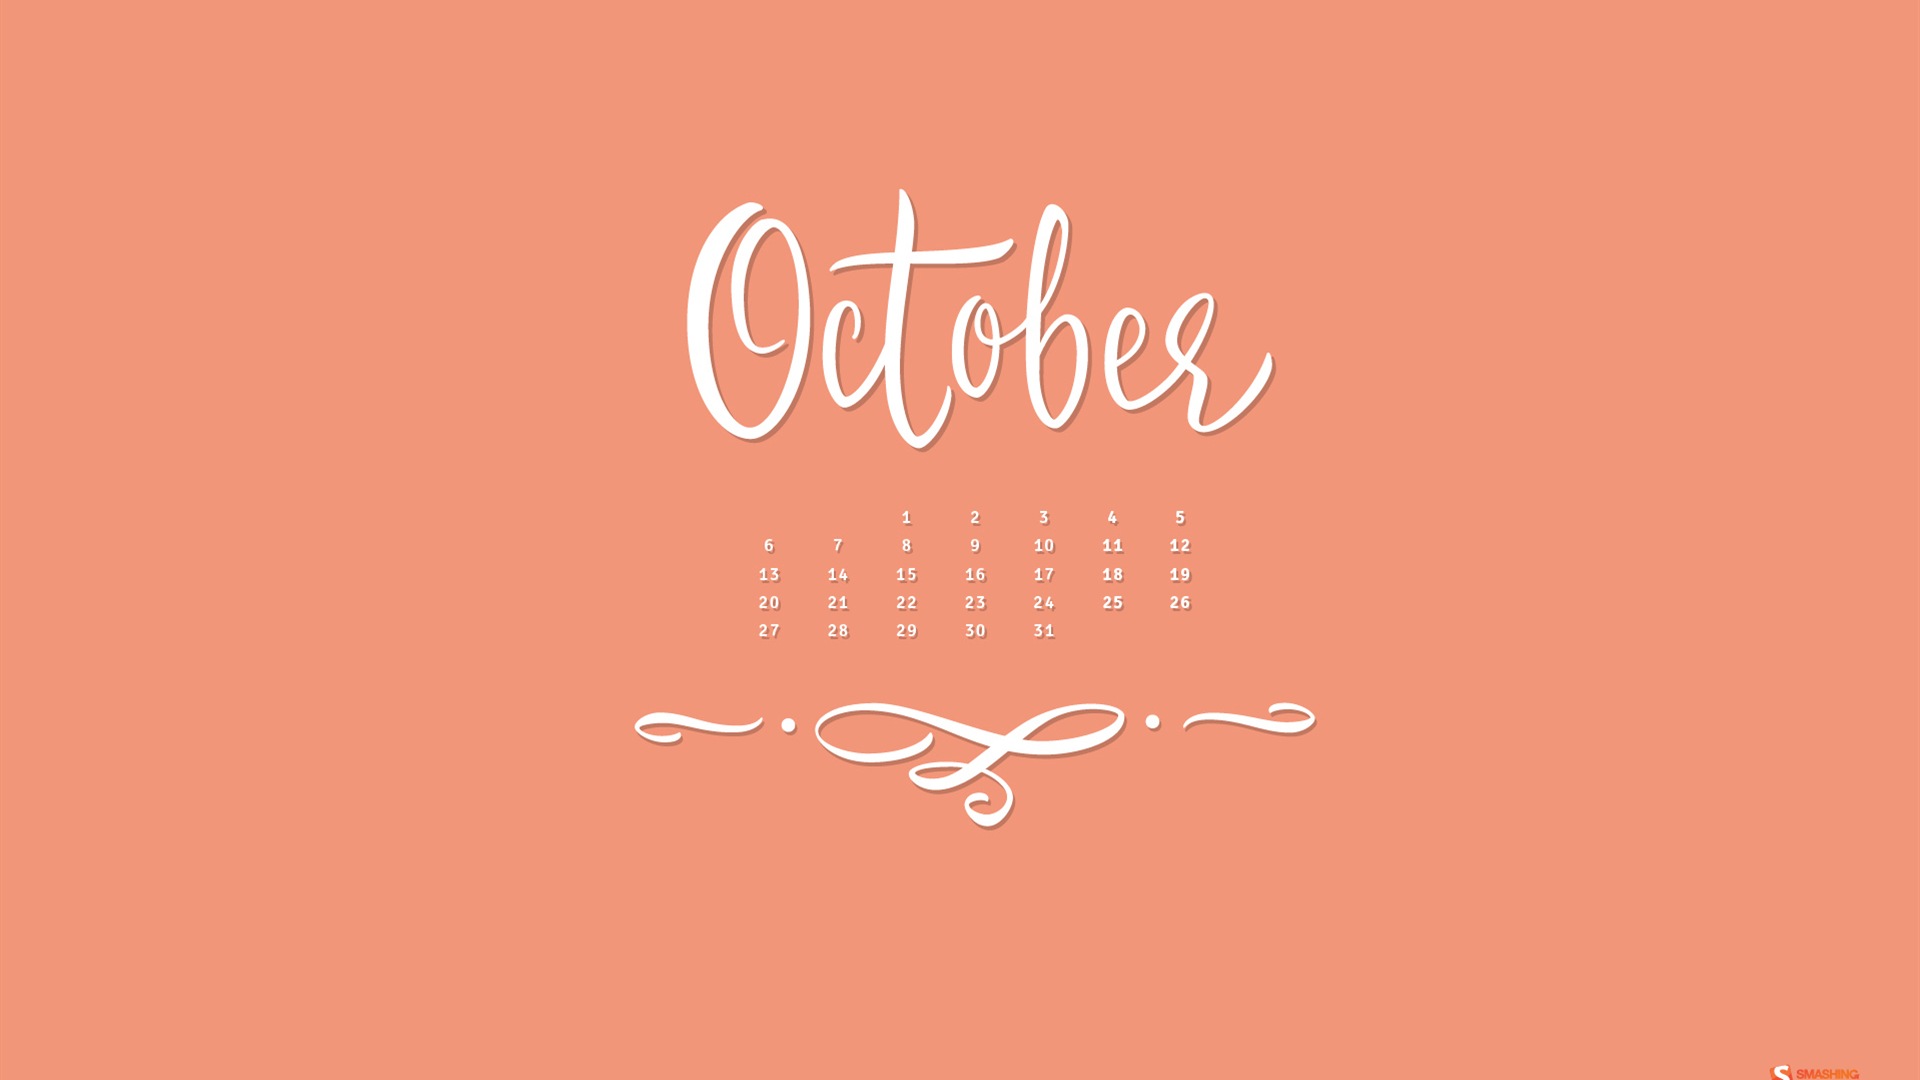 October 2014 Calendar wallpaper (2) #11 - 1920x1080